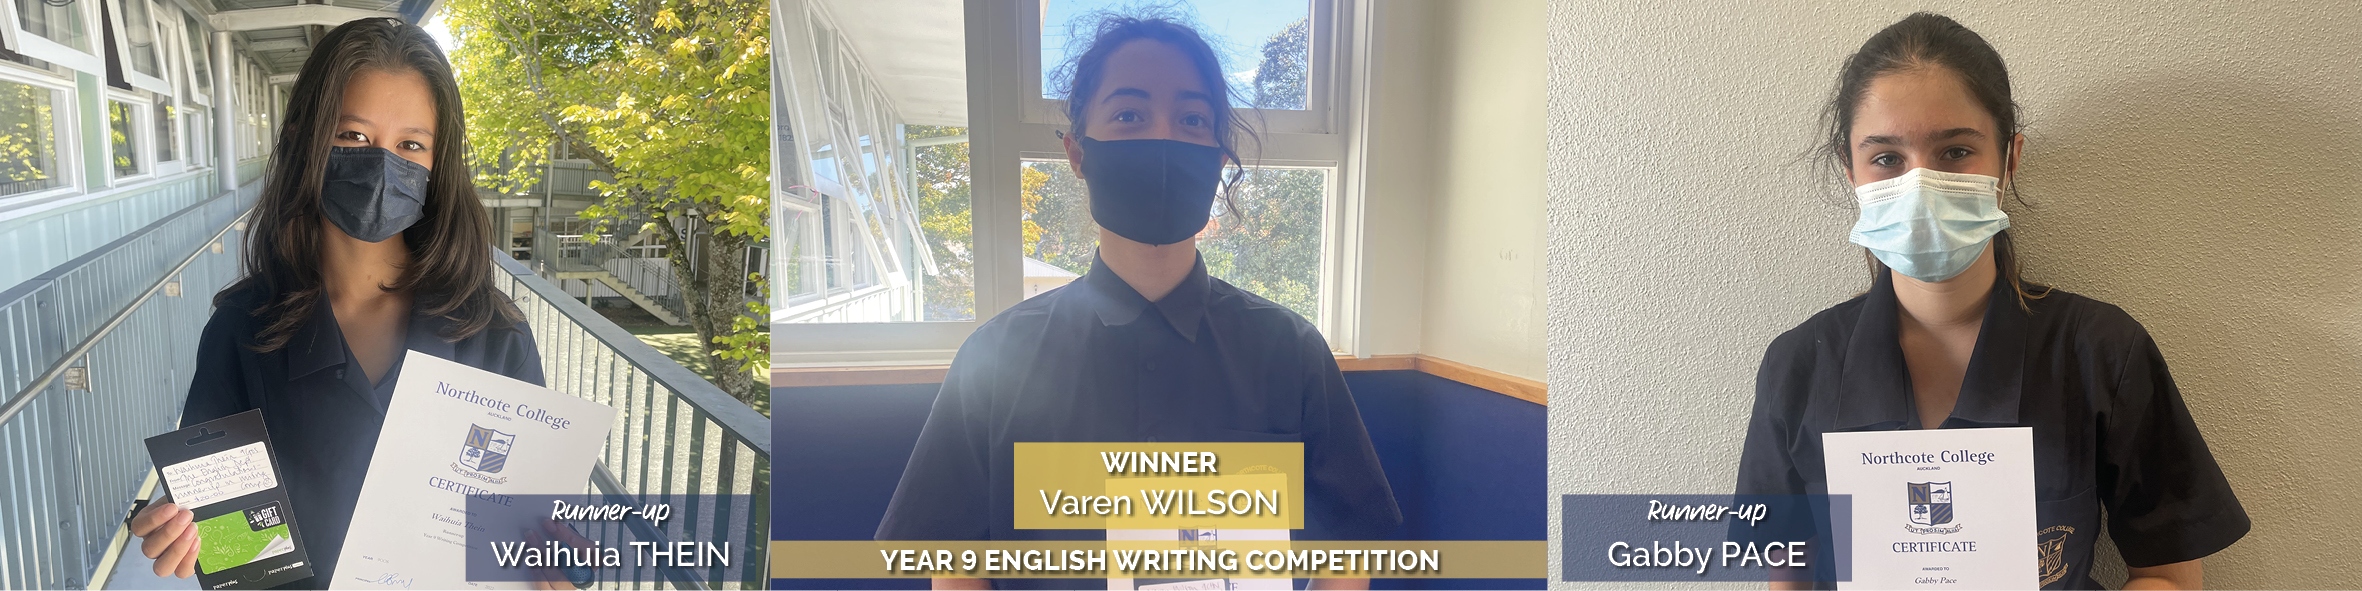 Year 9 writing contest winners 